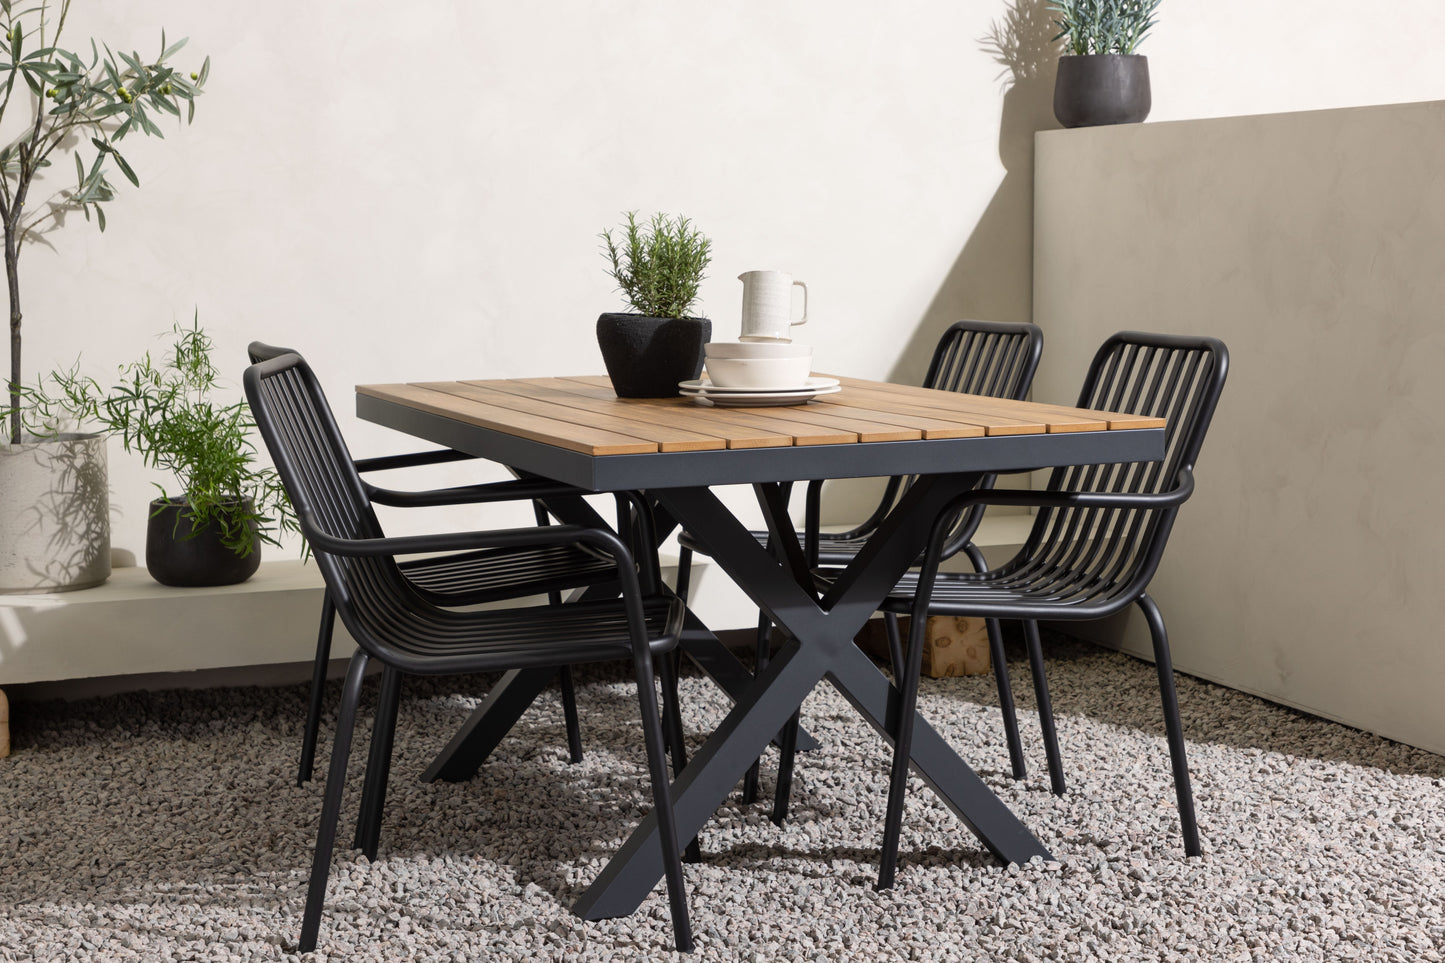 Garcia - Spisebord, Aluminium - Sort / Rektangulær 90*150* + Pekig stol Aluminium - Sort